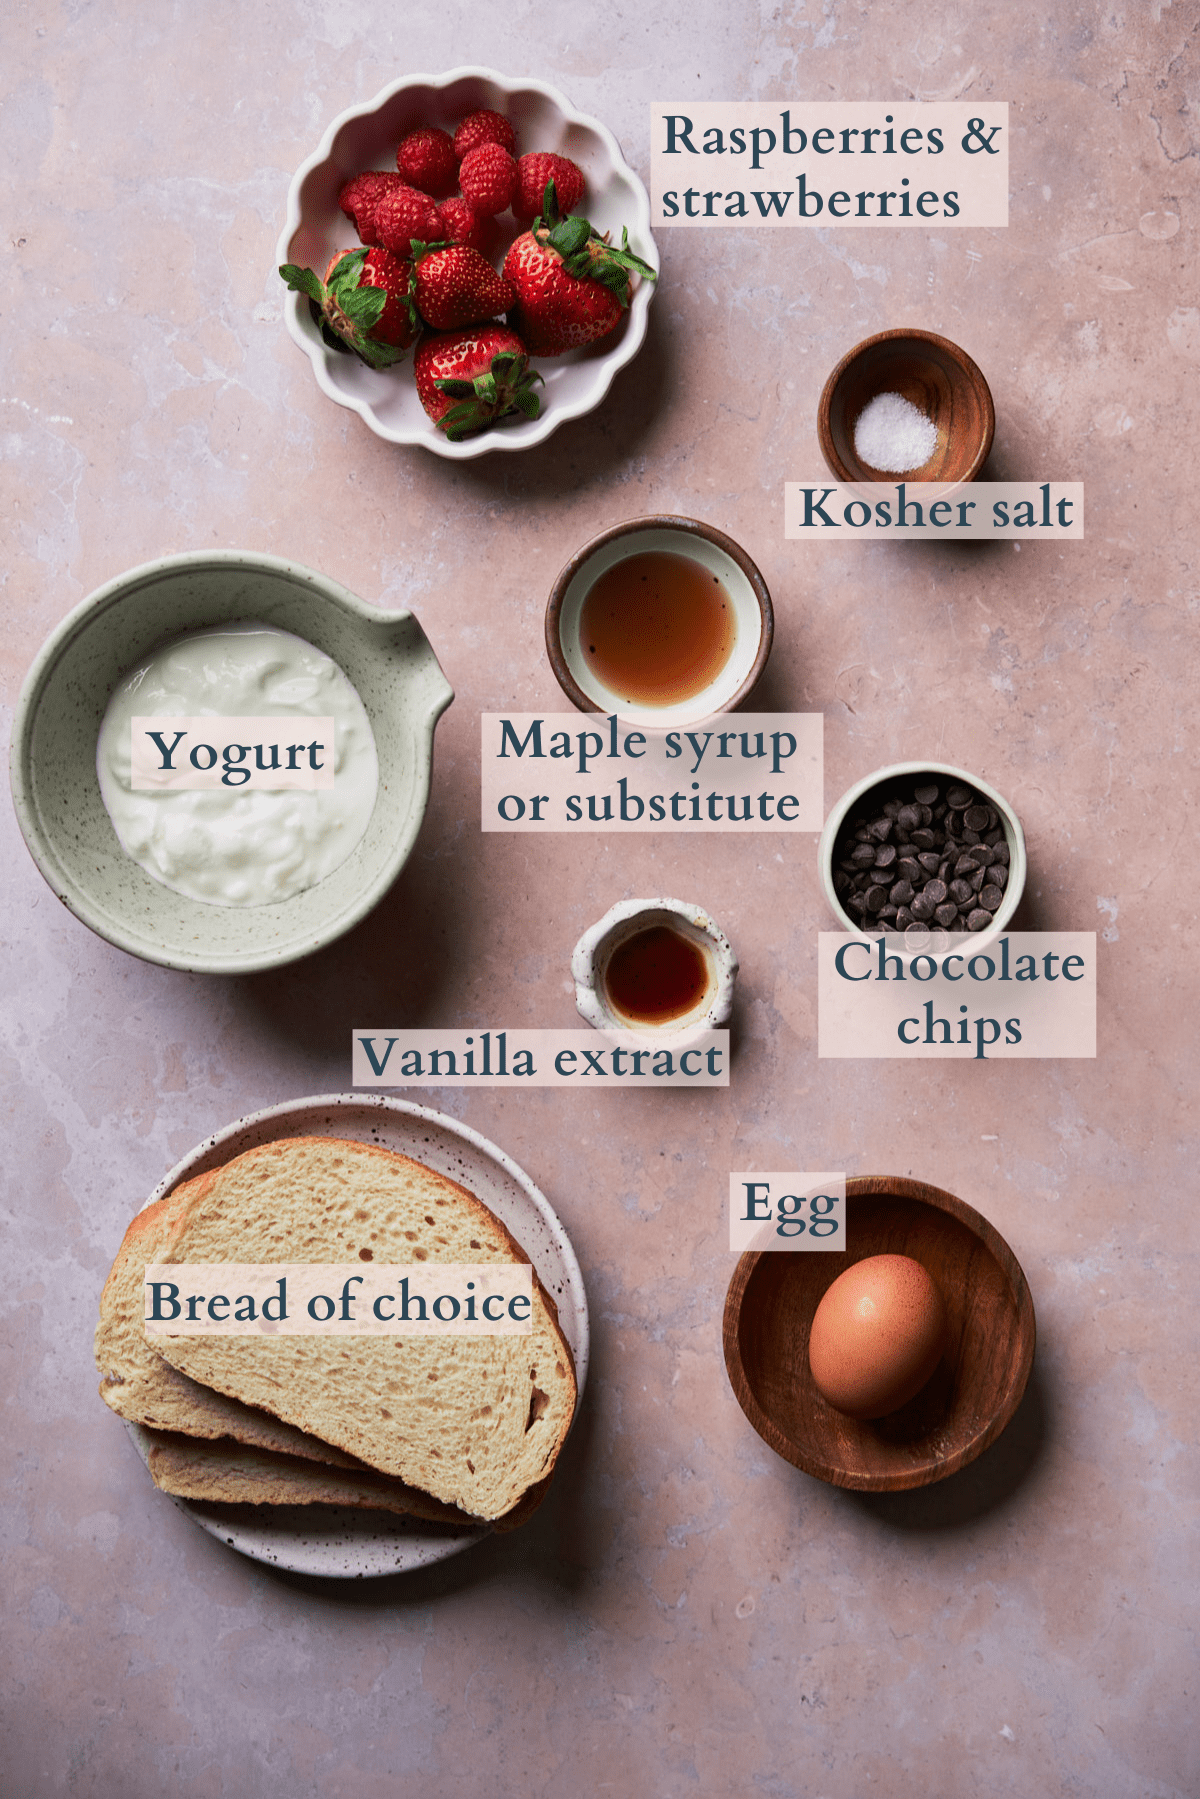 tiktok custard toast ingredients including egg, yogurt, vanilla extract, maple syrup substitute, strawberries, raspberries, kosher salt, chocolate chips, and bread.